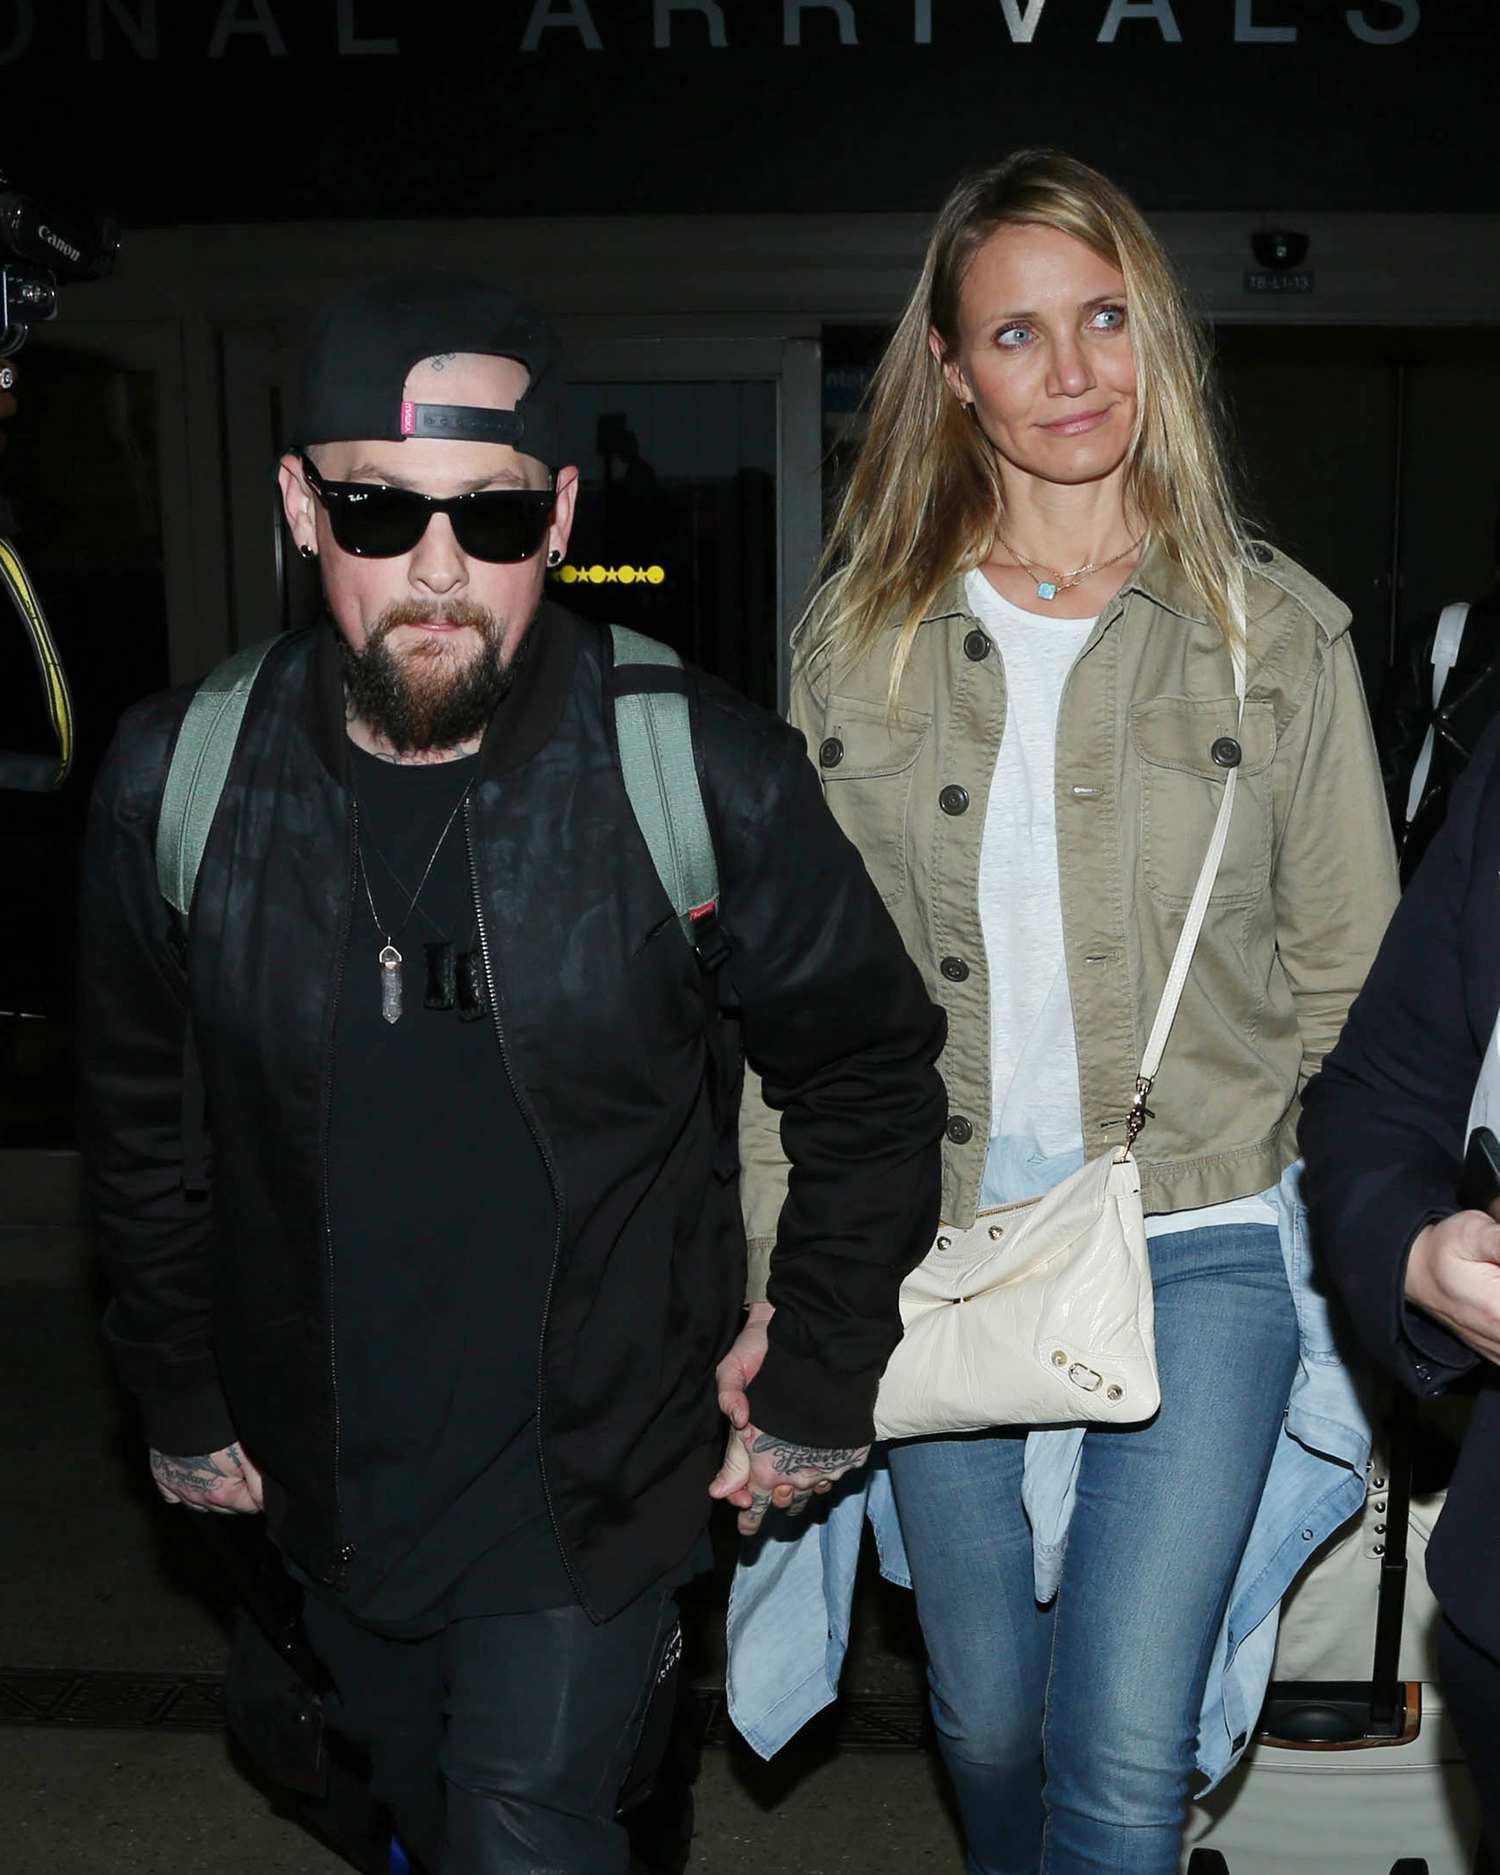 Cameron Diaz and Husband Benji Madden Arrive at LAX Airport